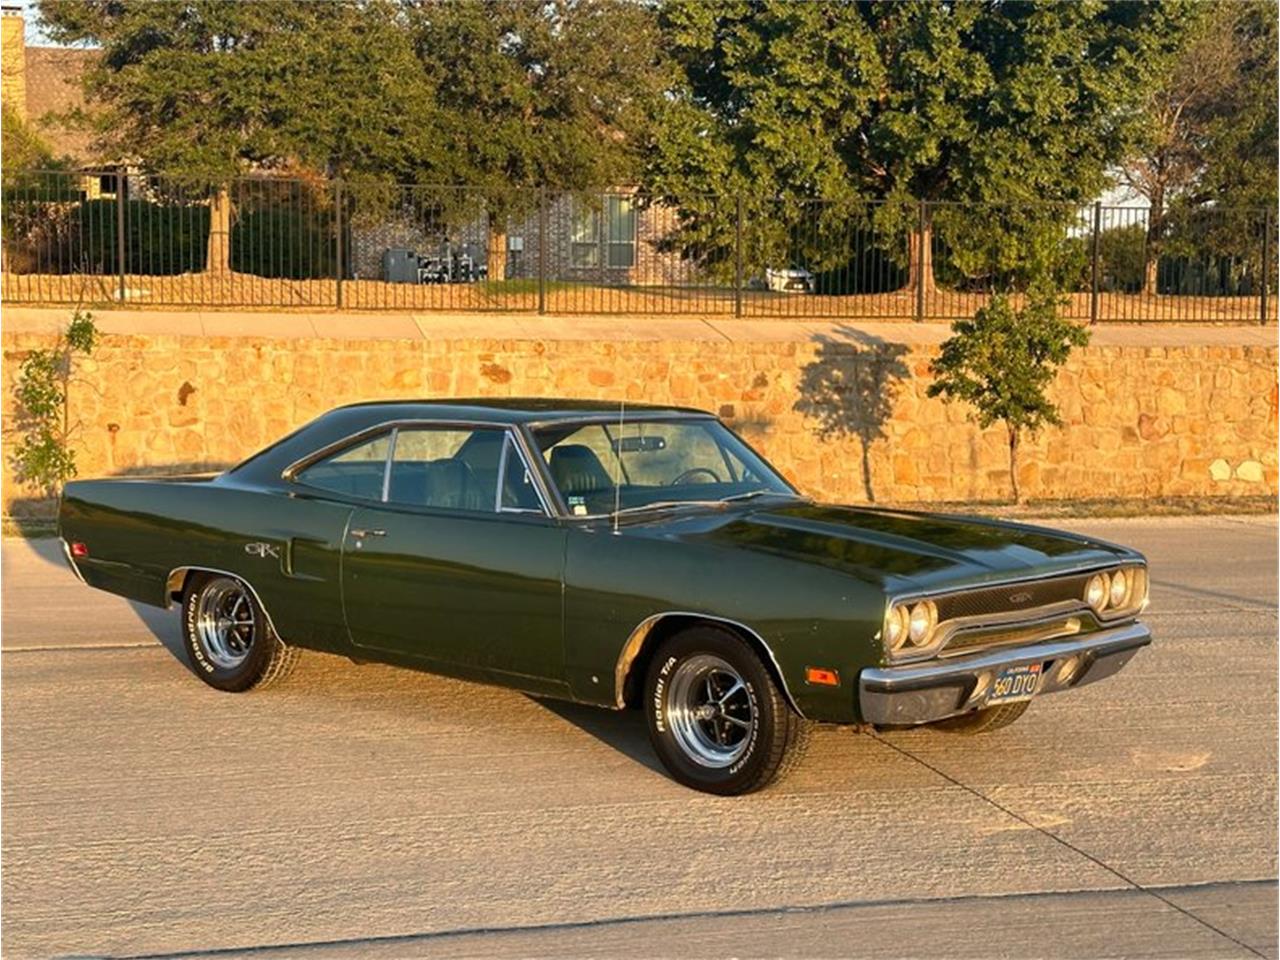 For Sale: 1970 Plymouth GTX in Allen, Texas for sale in Allen, TX